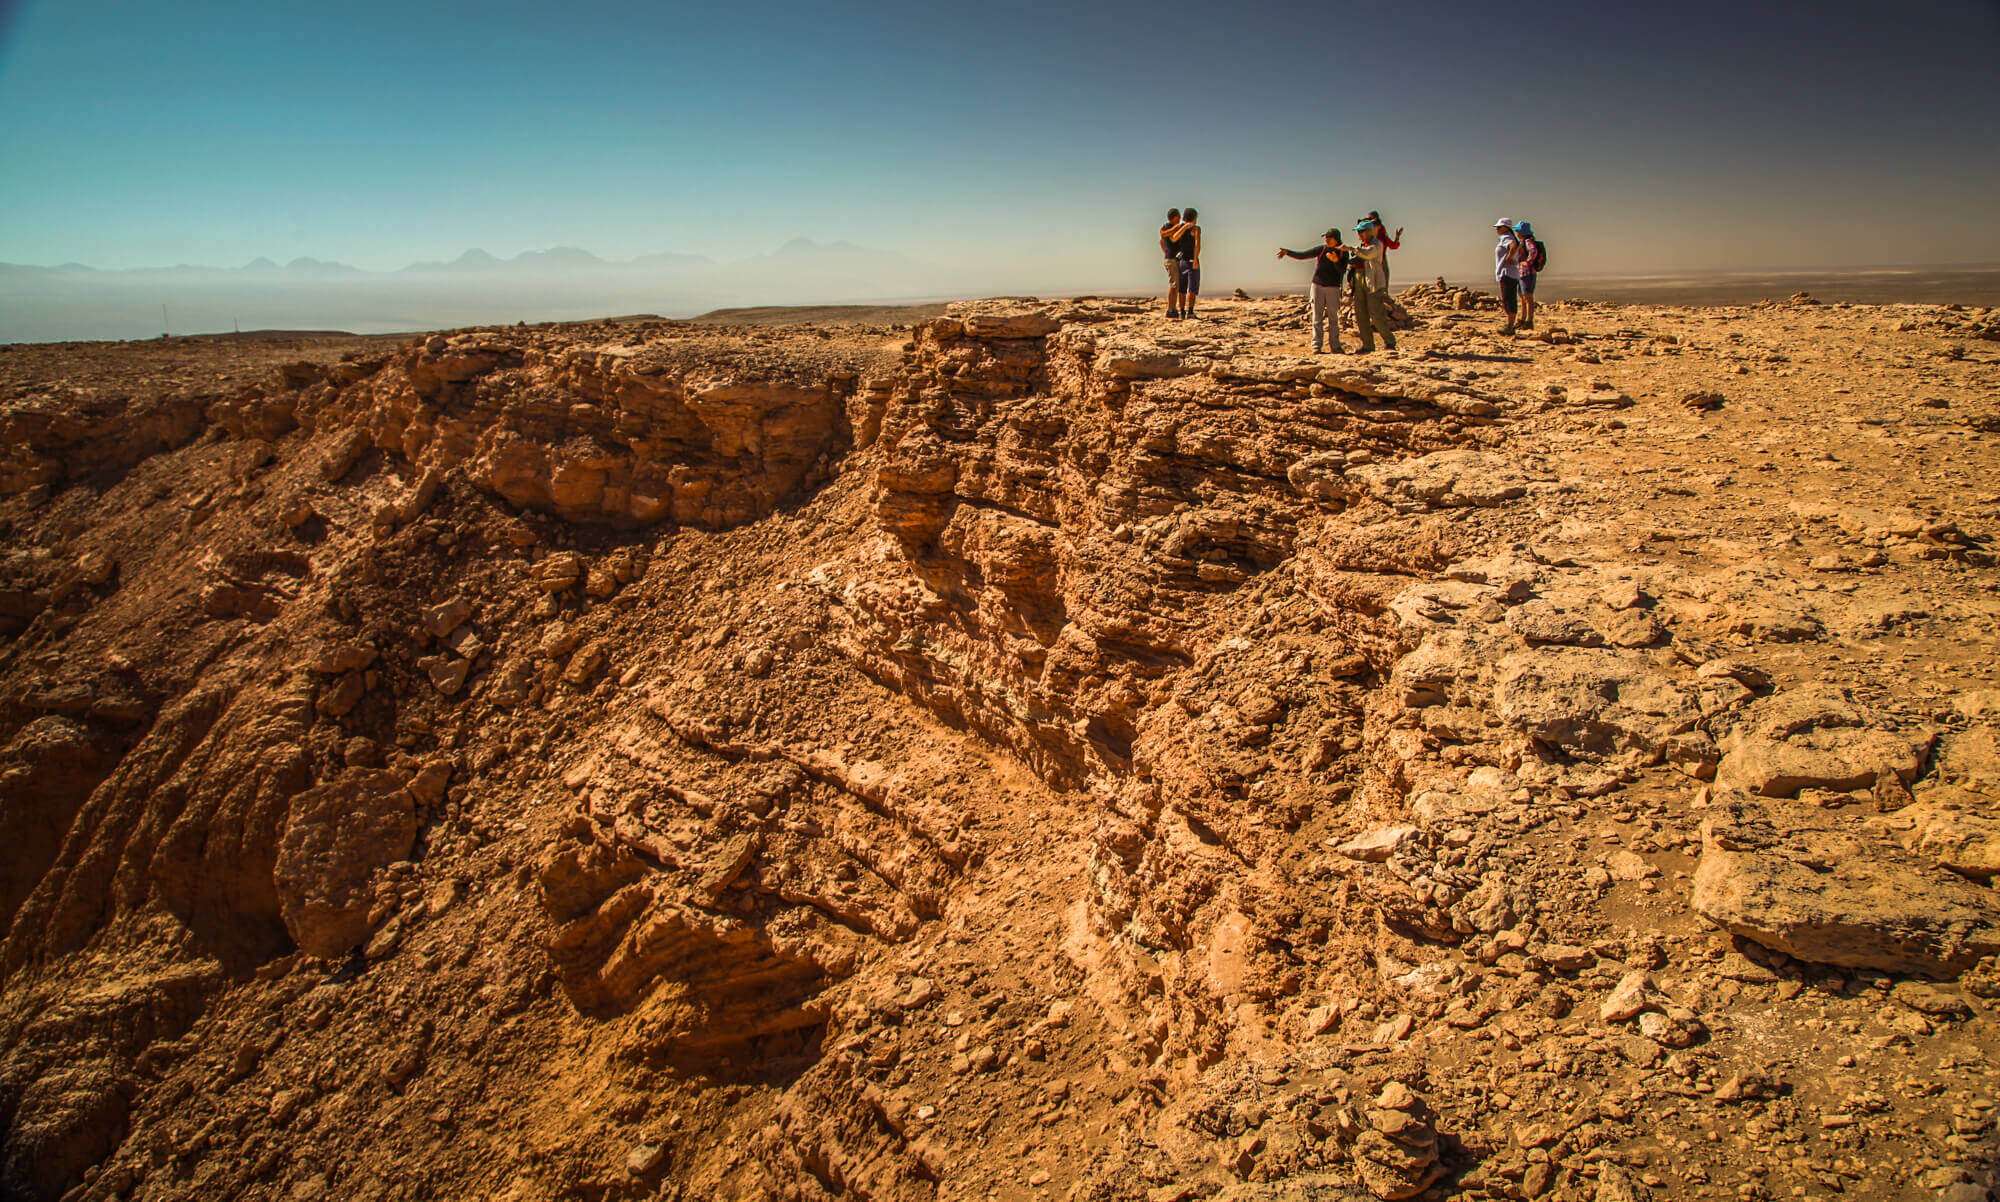 Valle de la Muerte driest place on earth